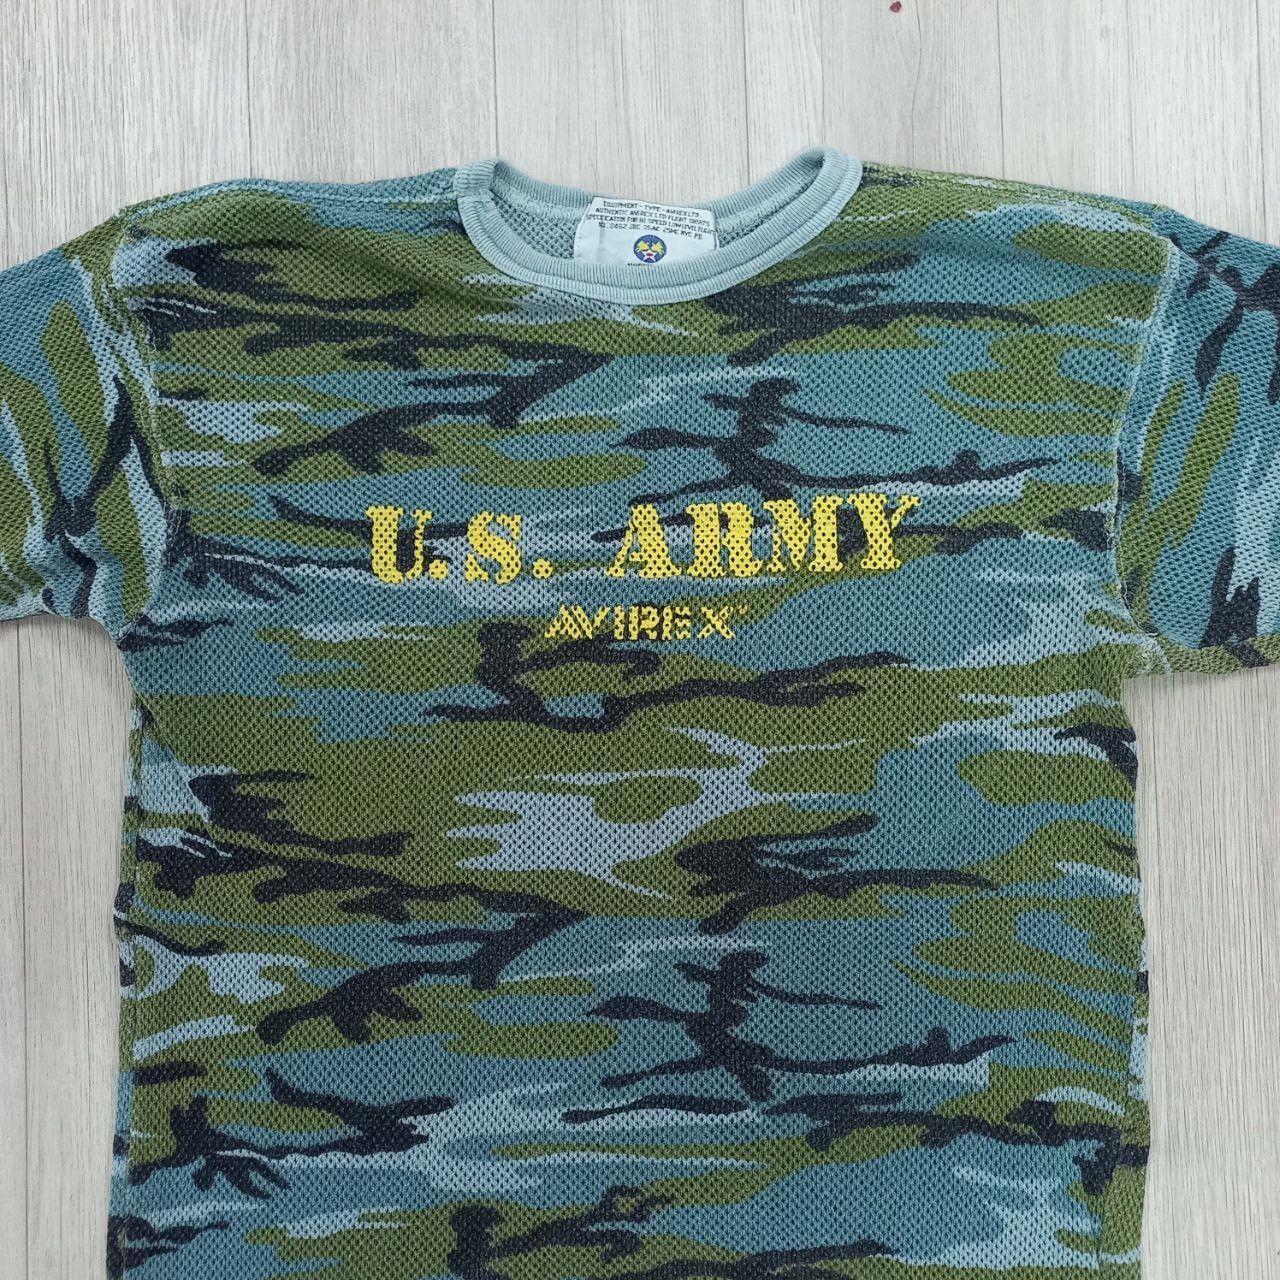 Vintage Vintage AVIREX U.S ARMY Mesh Camo T-shirt Size US L / EU 52-54 / 3 - 5 Thumbnail